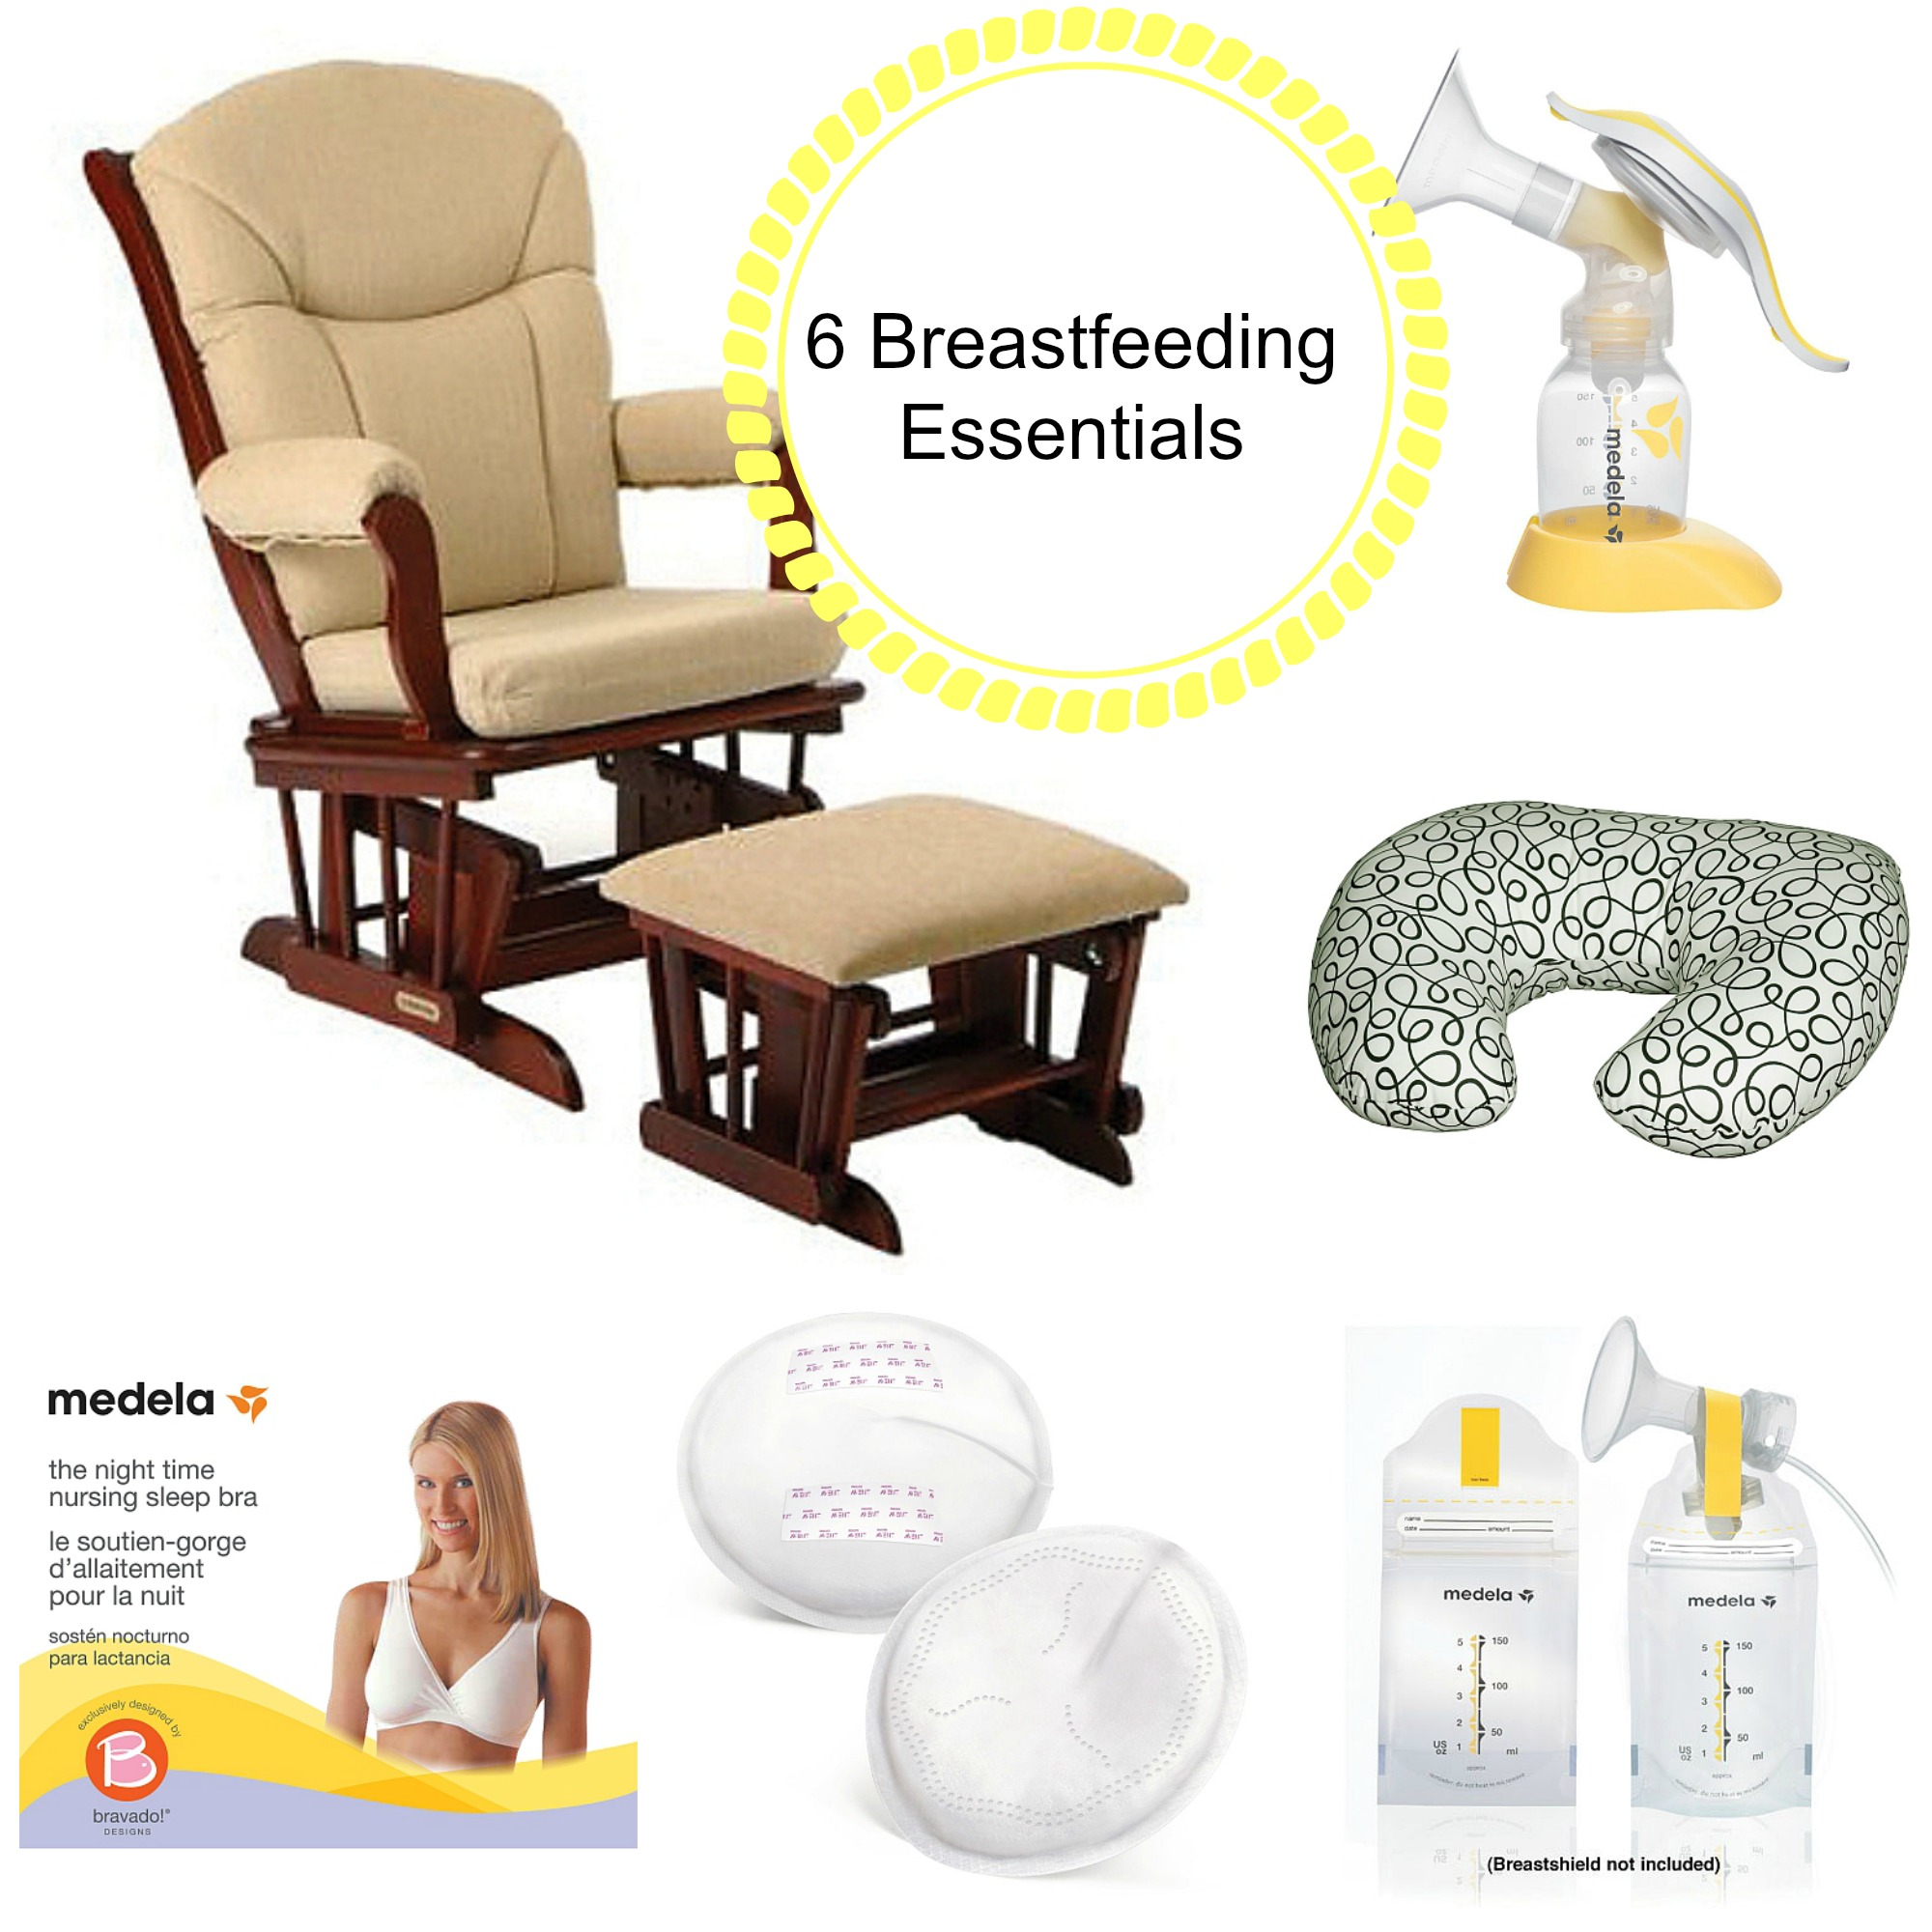 6 Breastfeeding Essentials